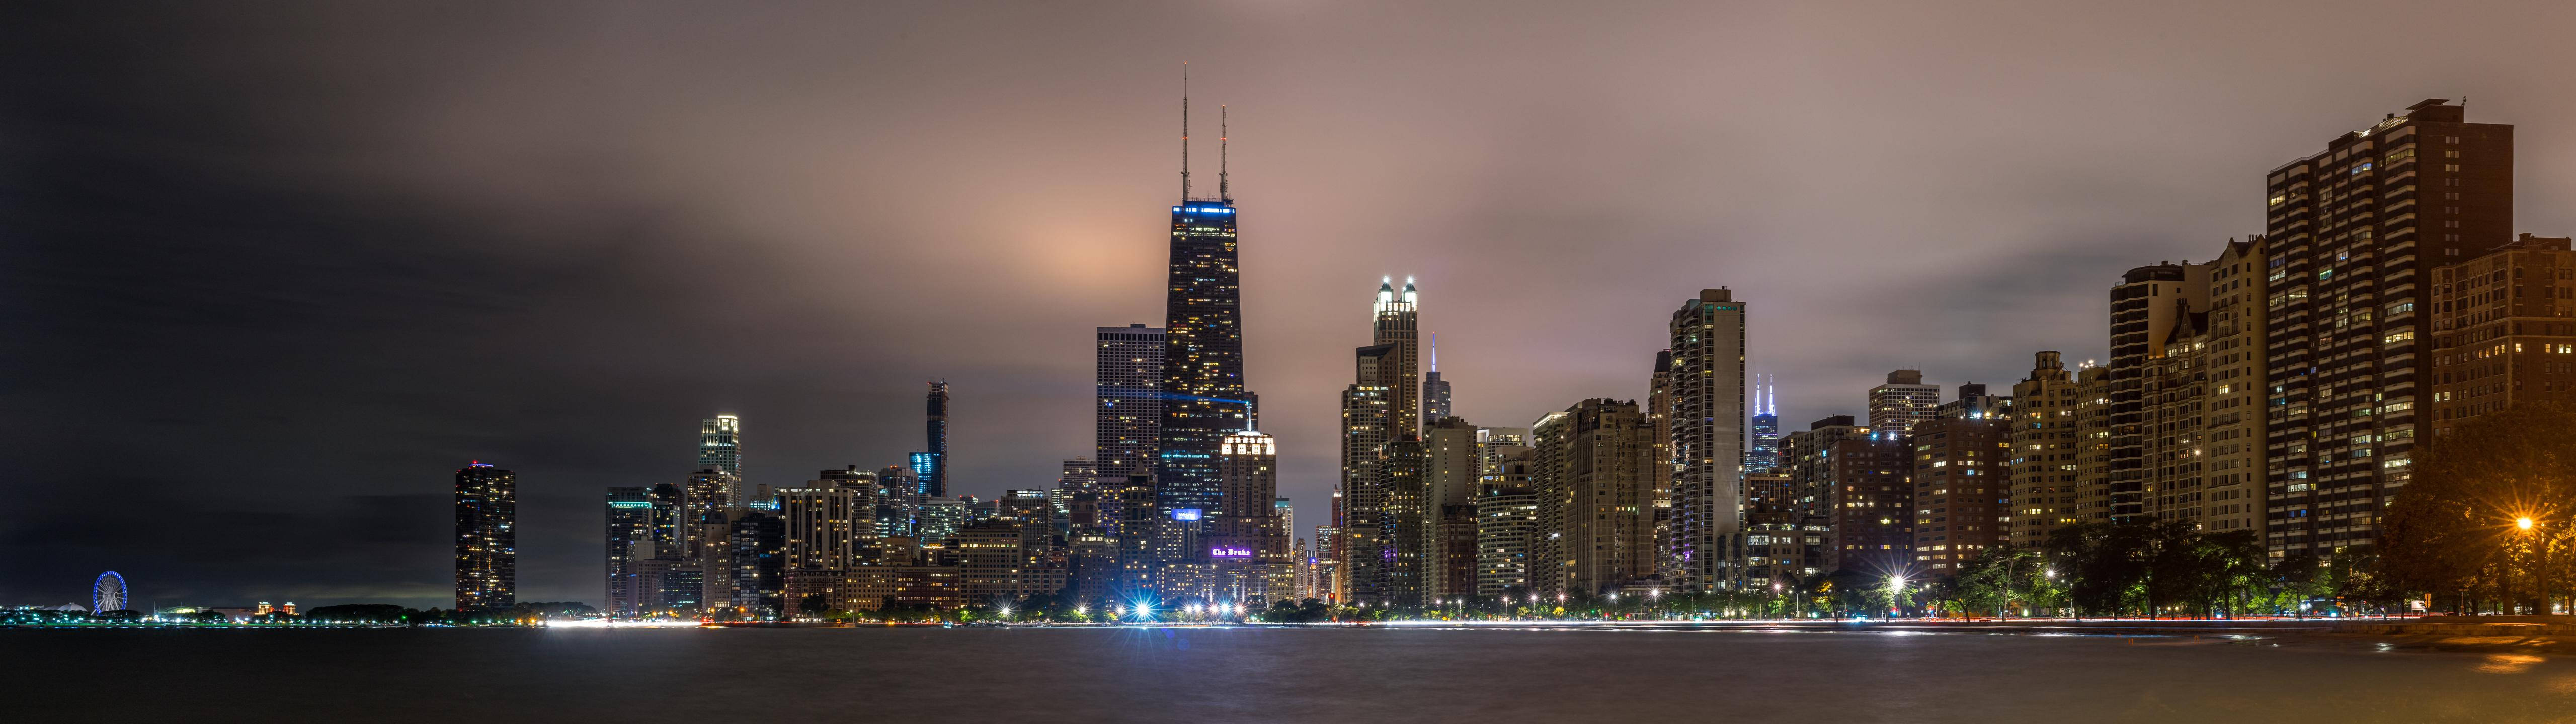 4k Dual Monitor Chicago Skyline At Night Background